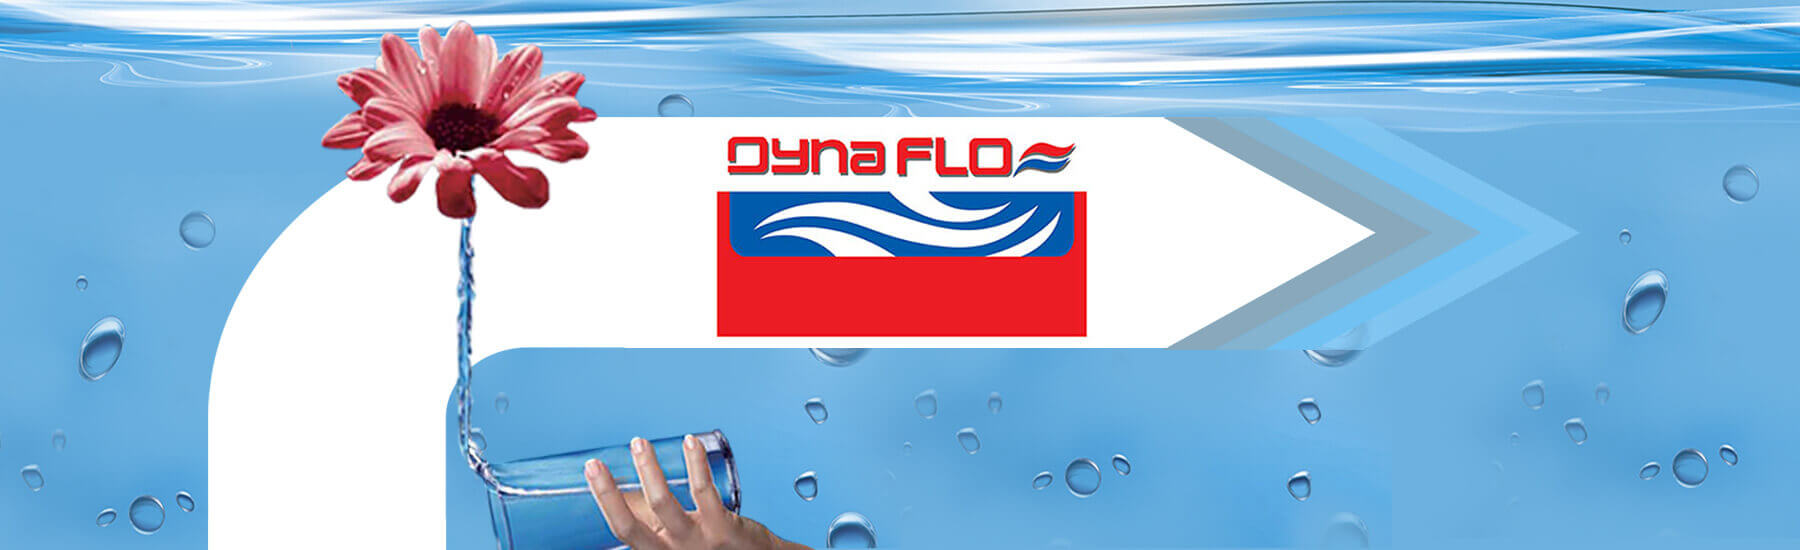 DynaFlo Pump Banner